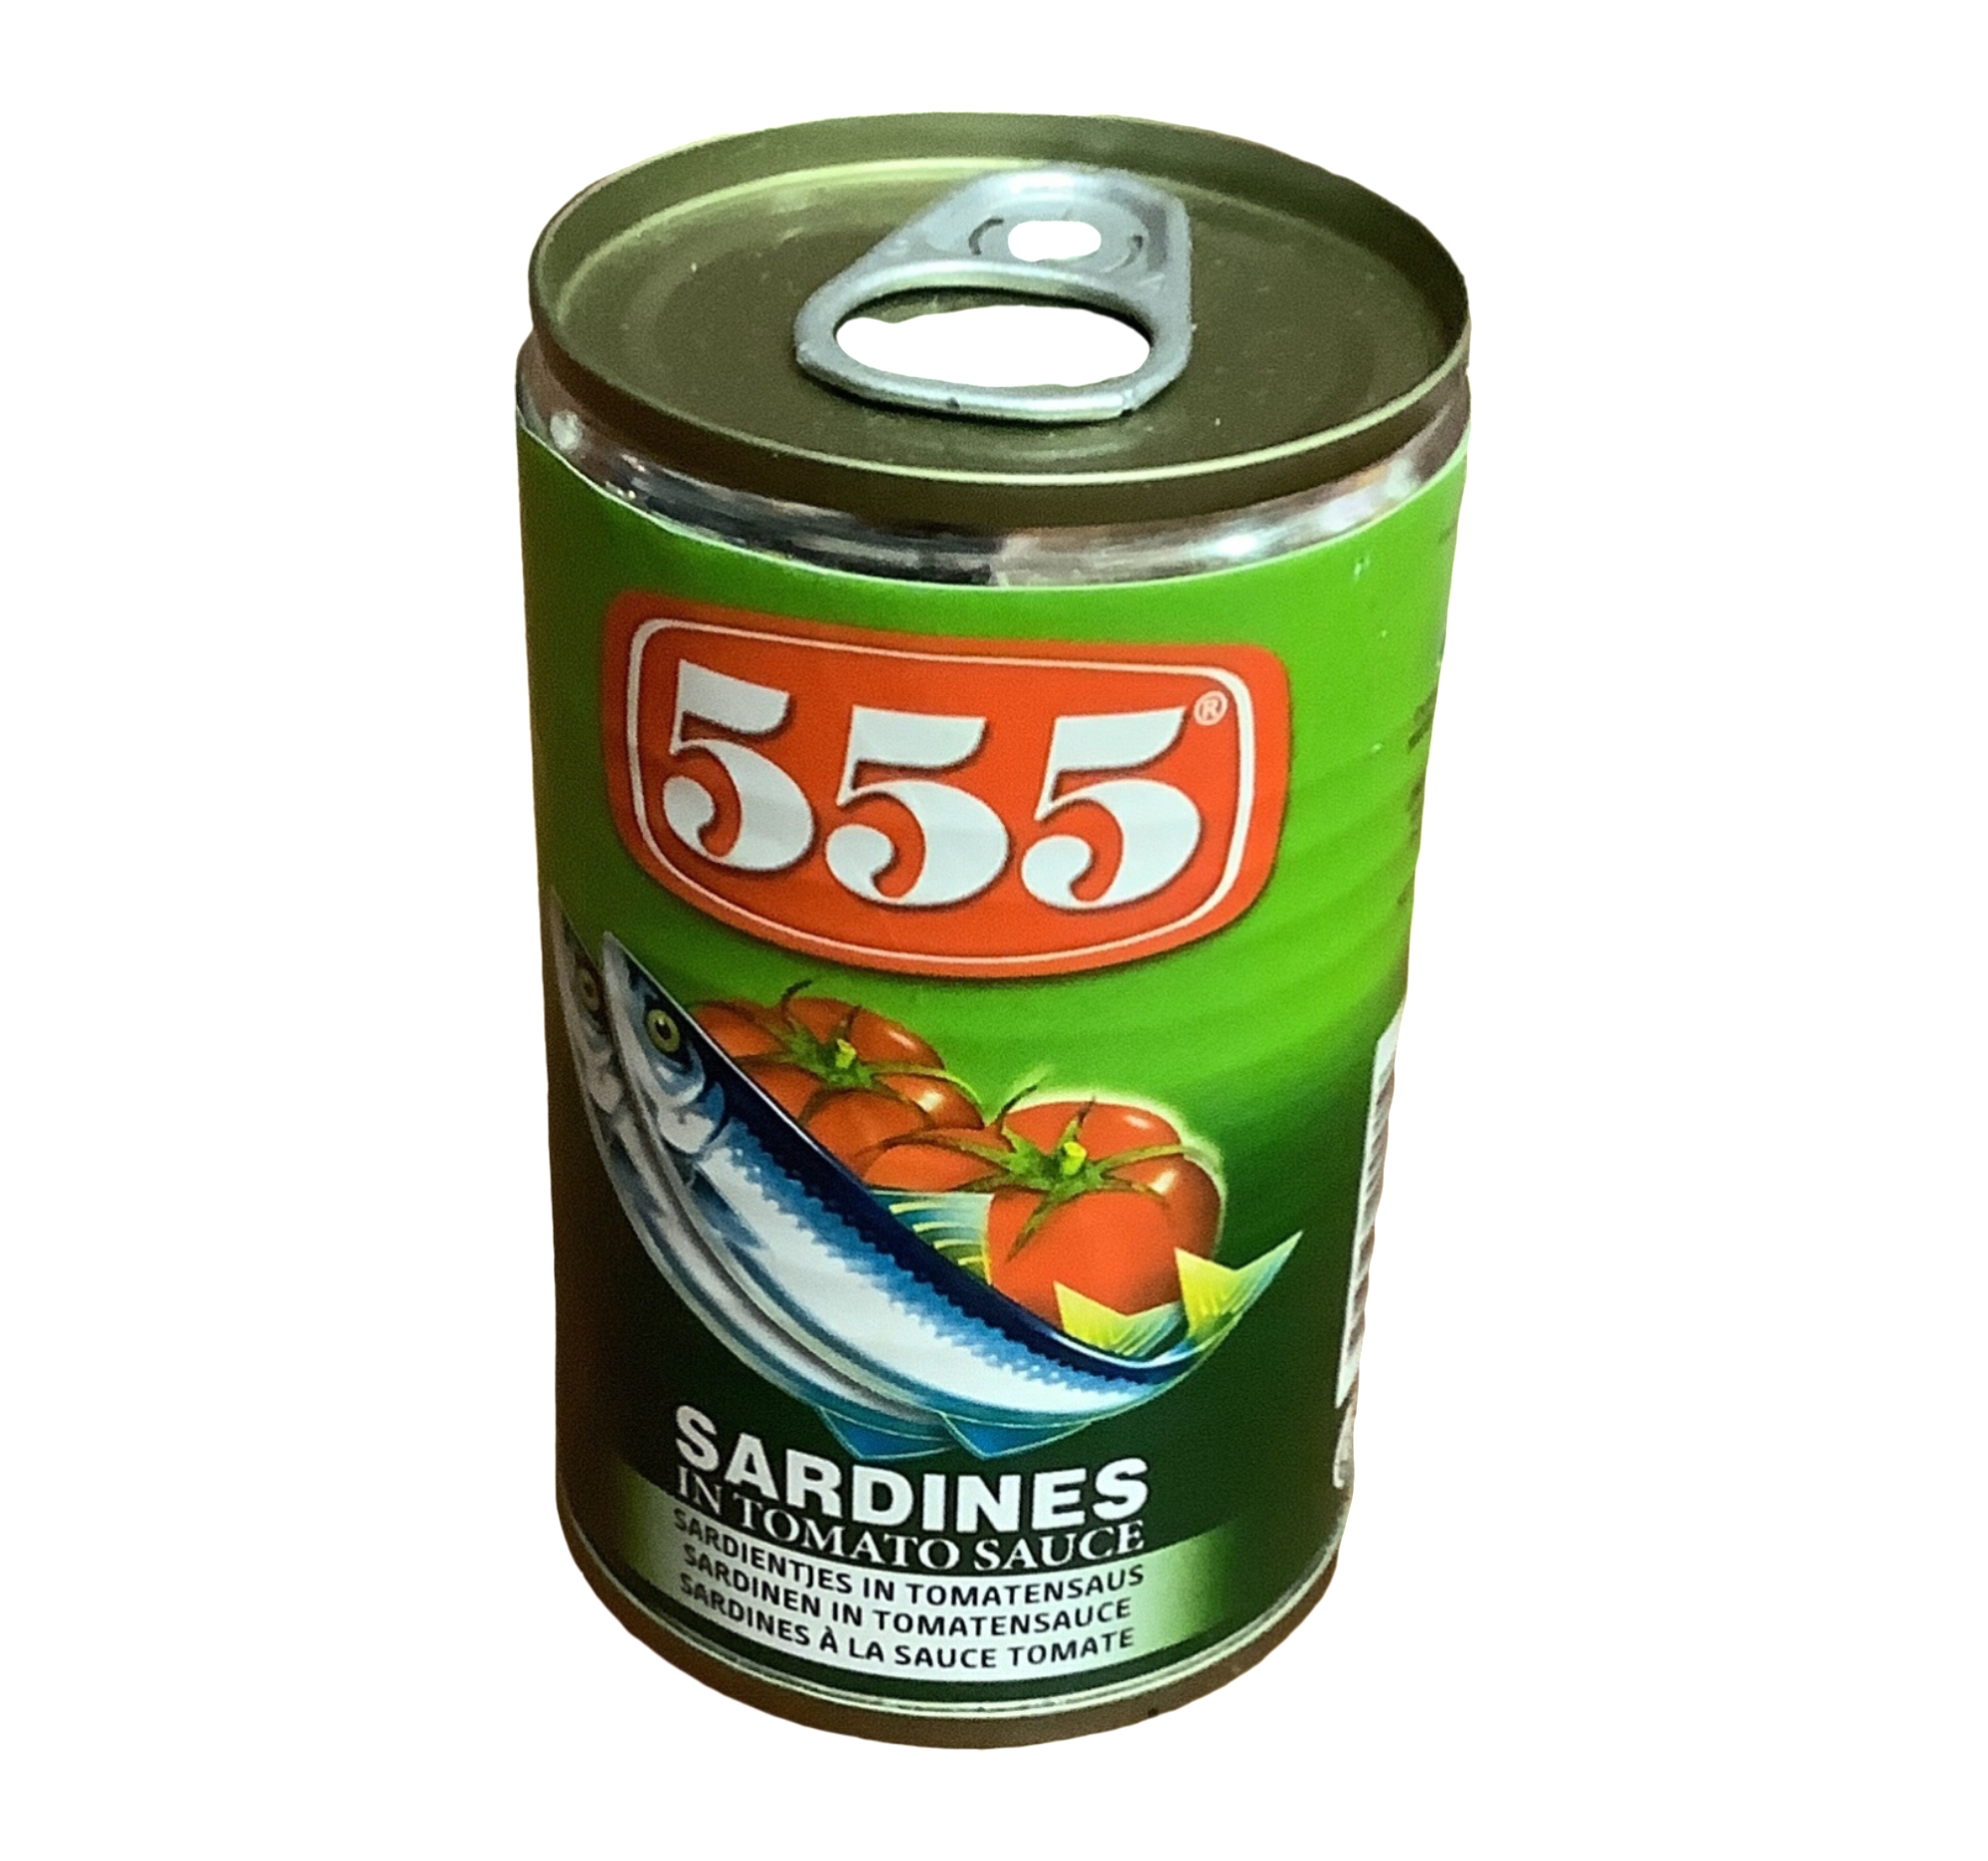 555 Sardines in tomato Sauce